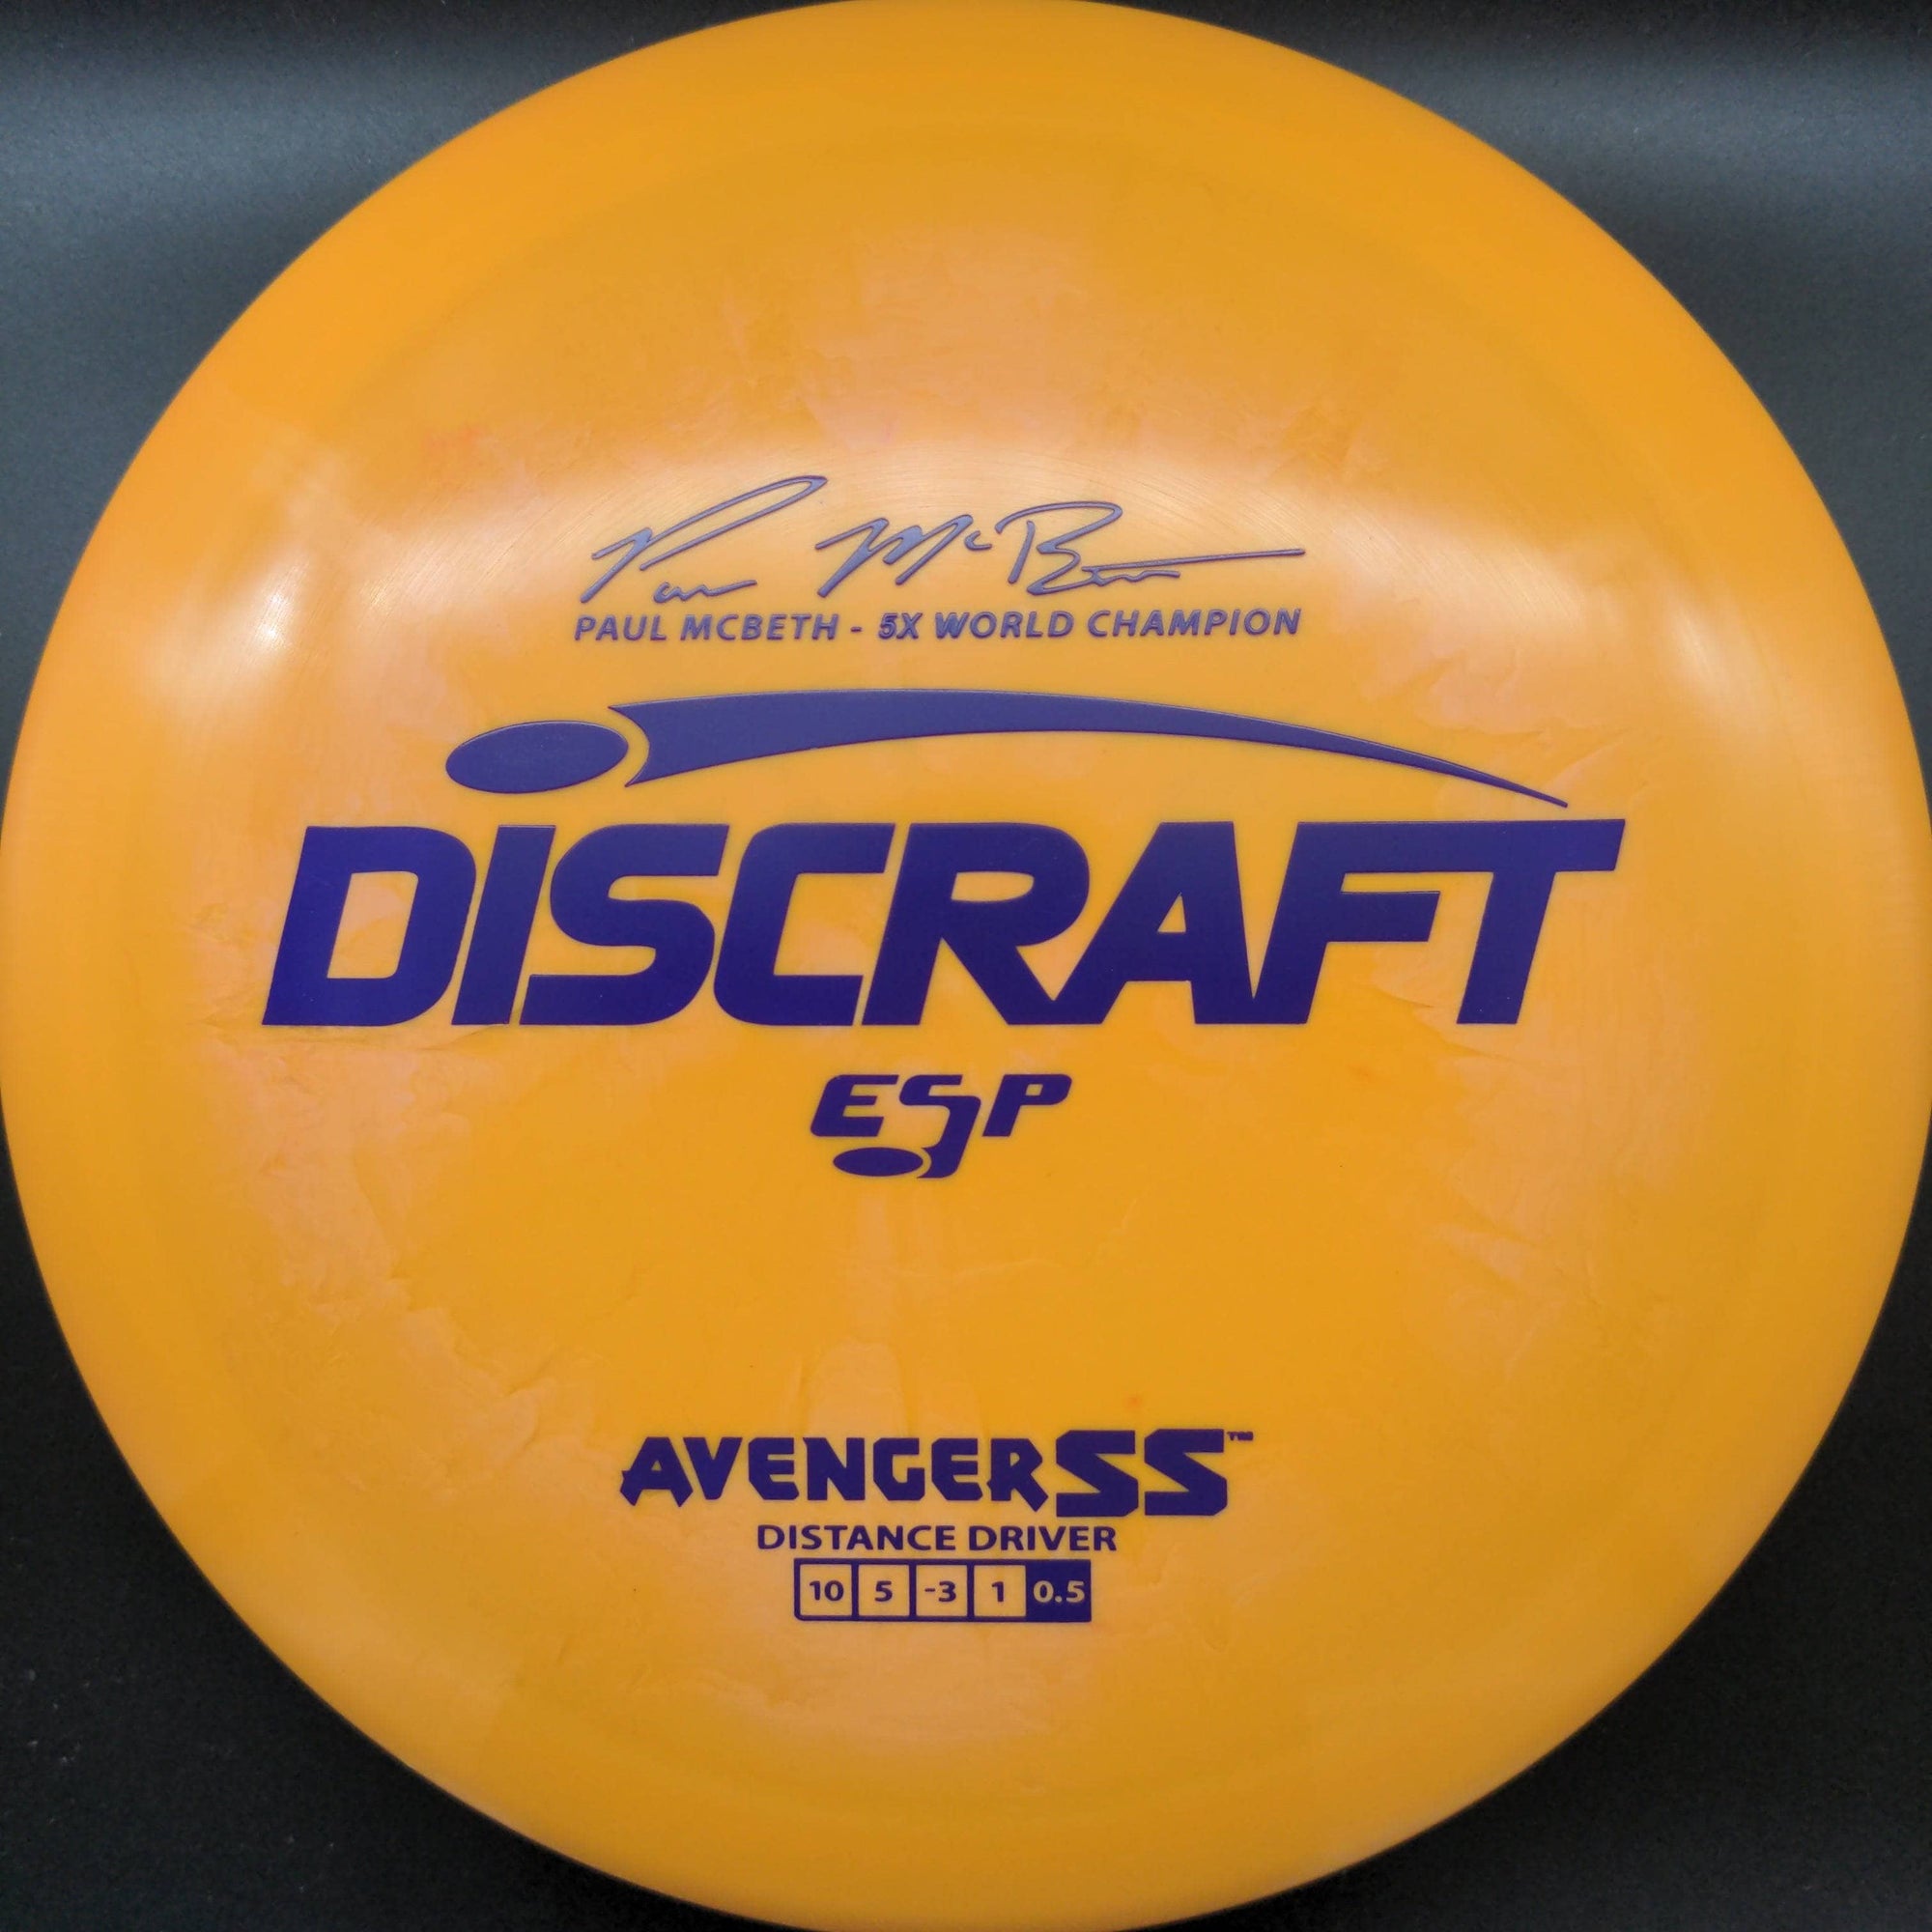 Discraft Distance Driver Orange Purple Stamp 174g Avenger SS, ESP Paul McBeth